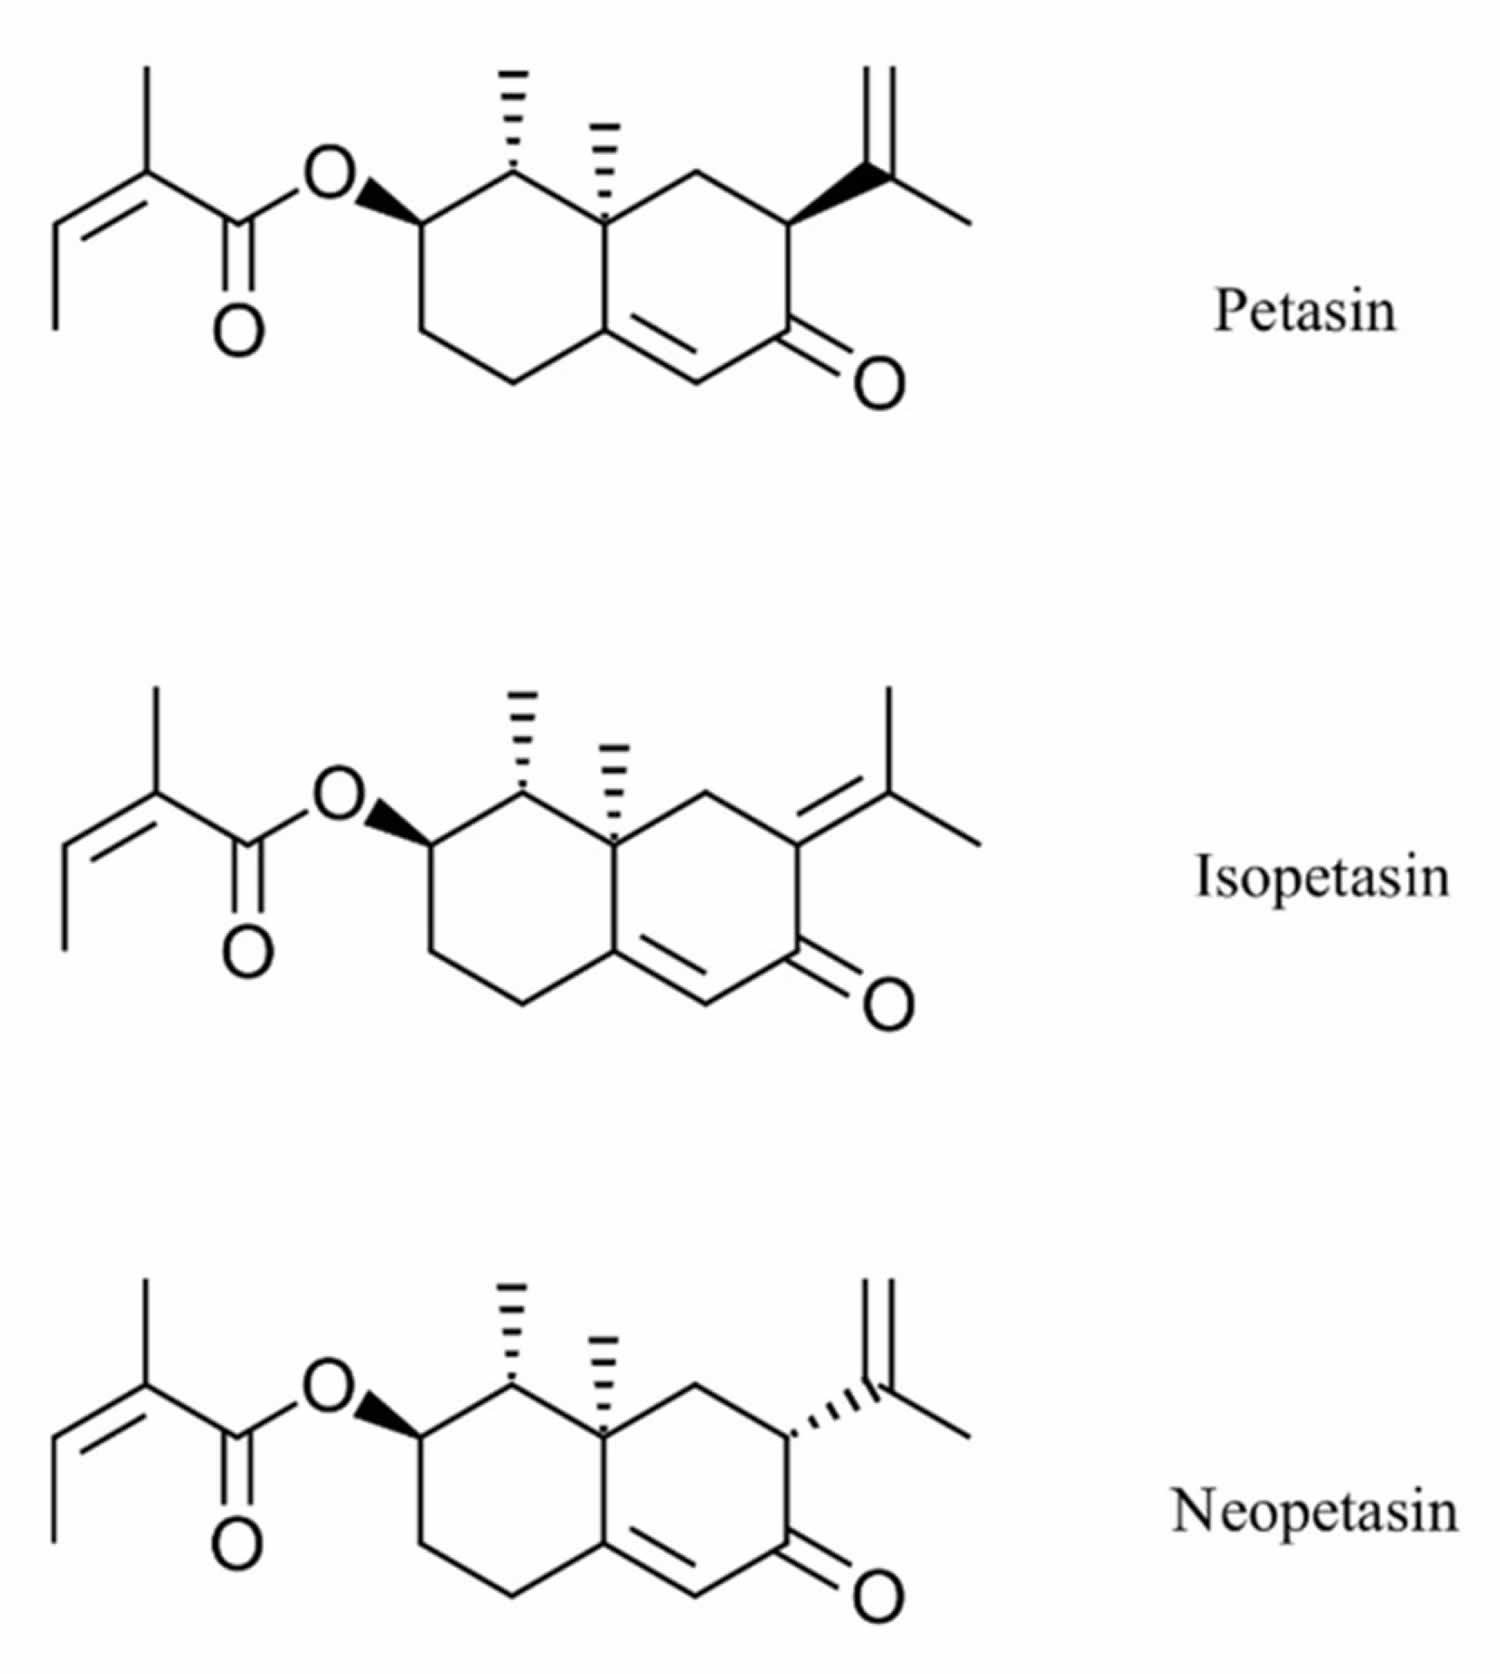 Petasins chemical structure